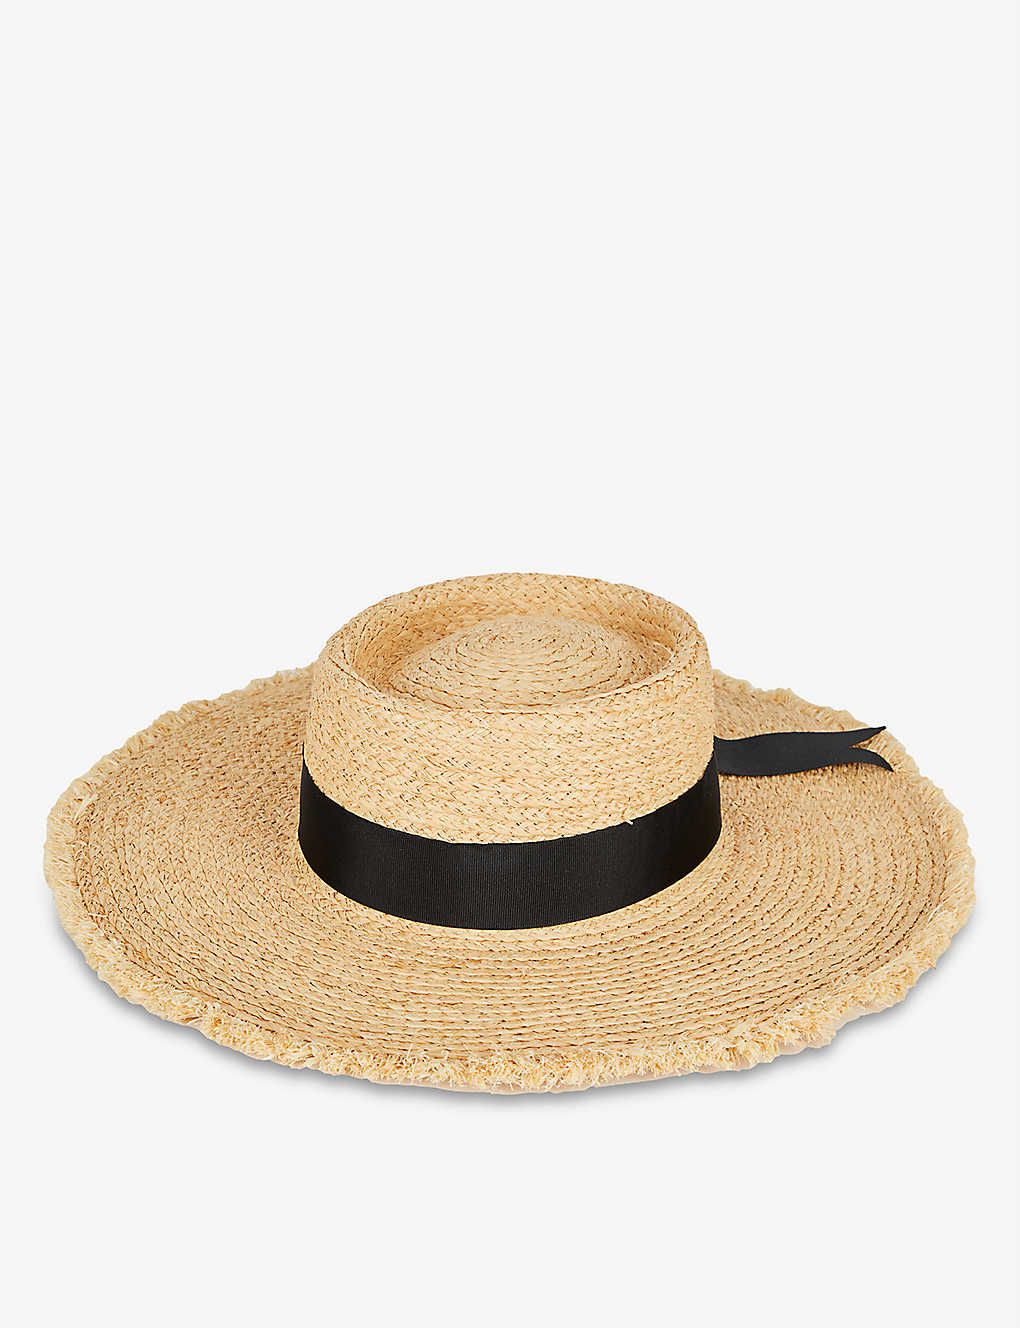 Ventura grosgrain-trimmed straw hat | Selfridges